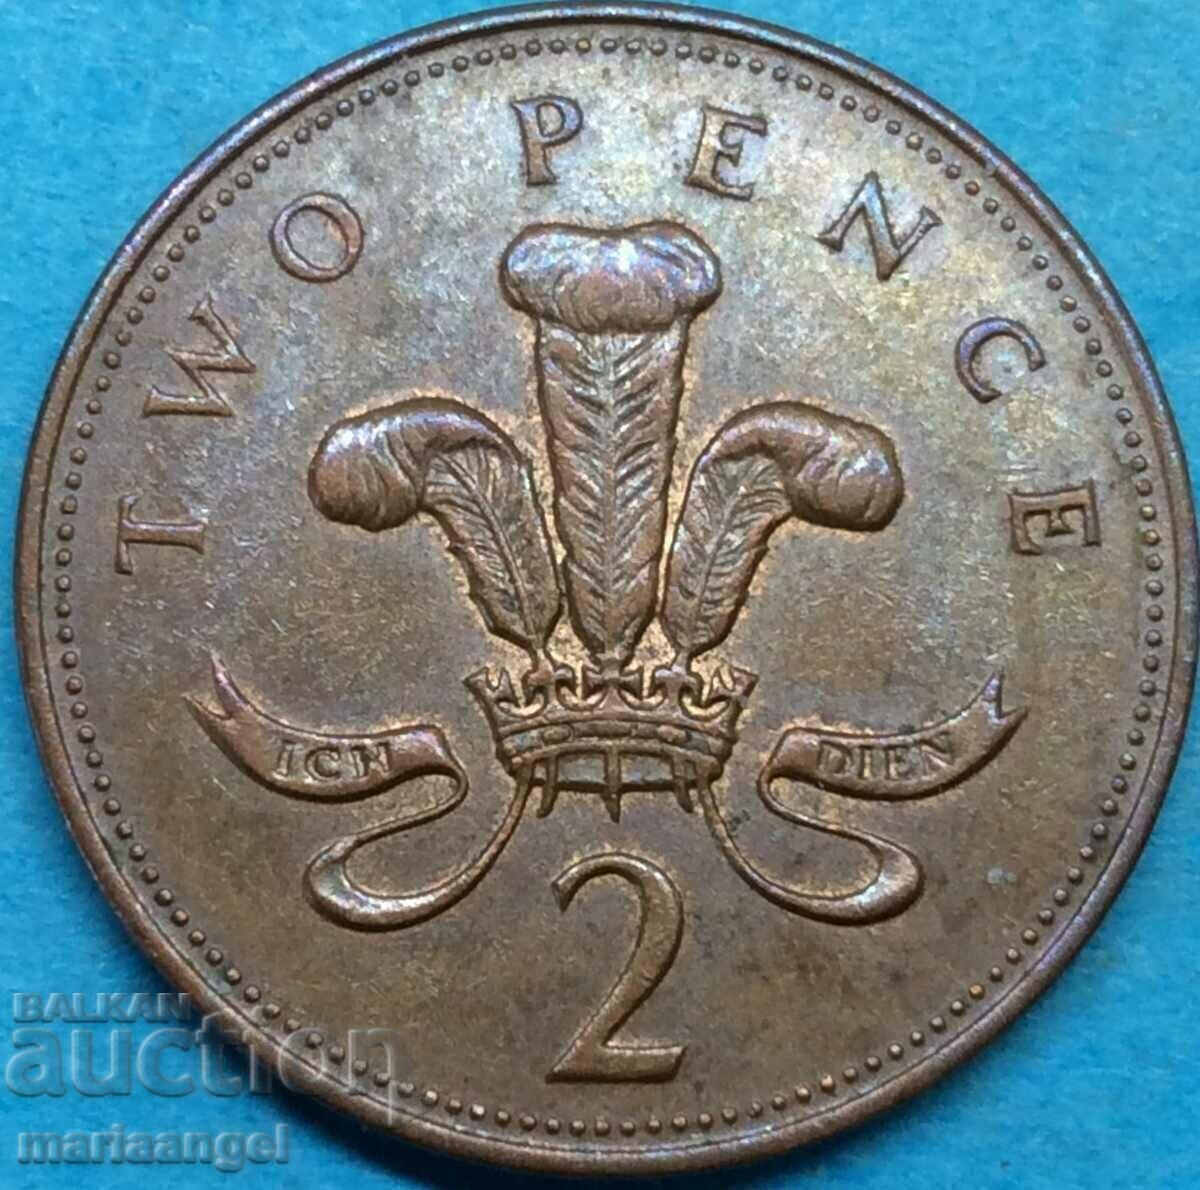 Great Britain 2 new pence 1997 - quite rare